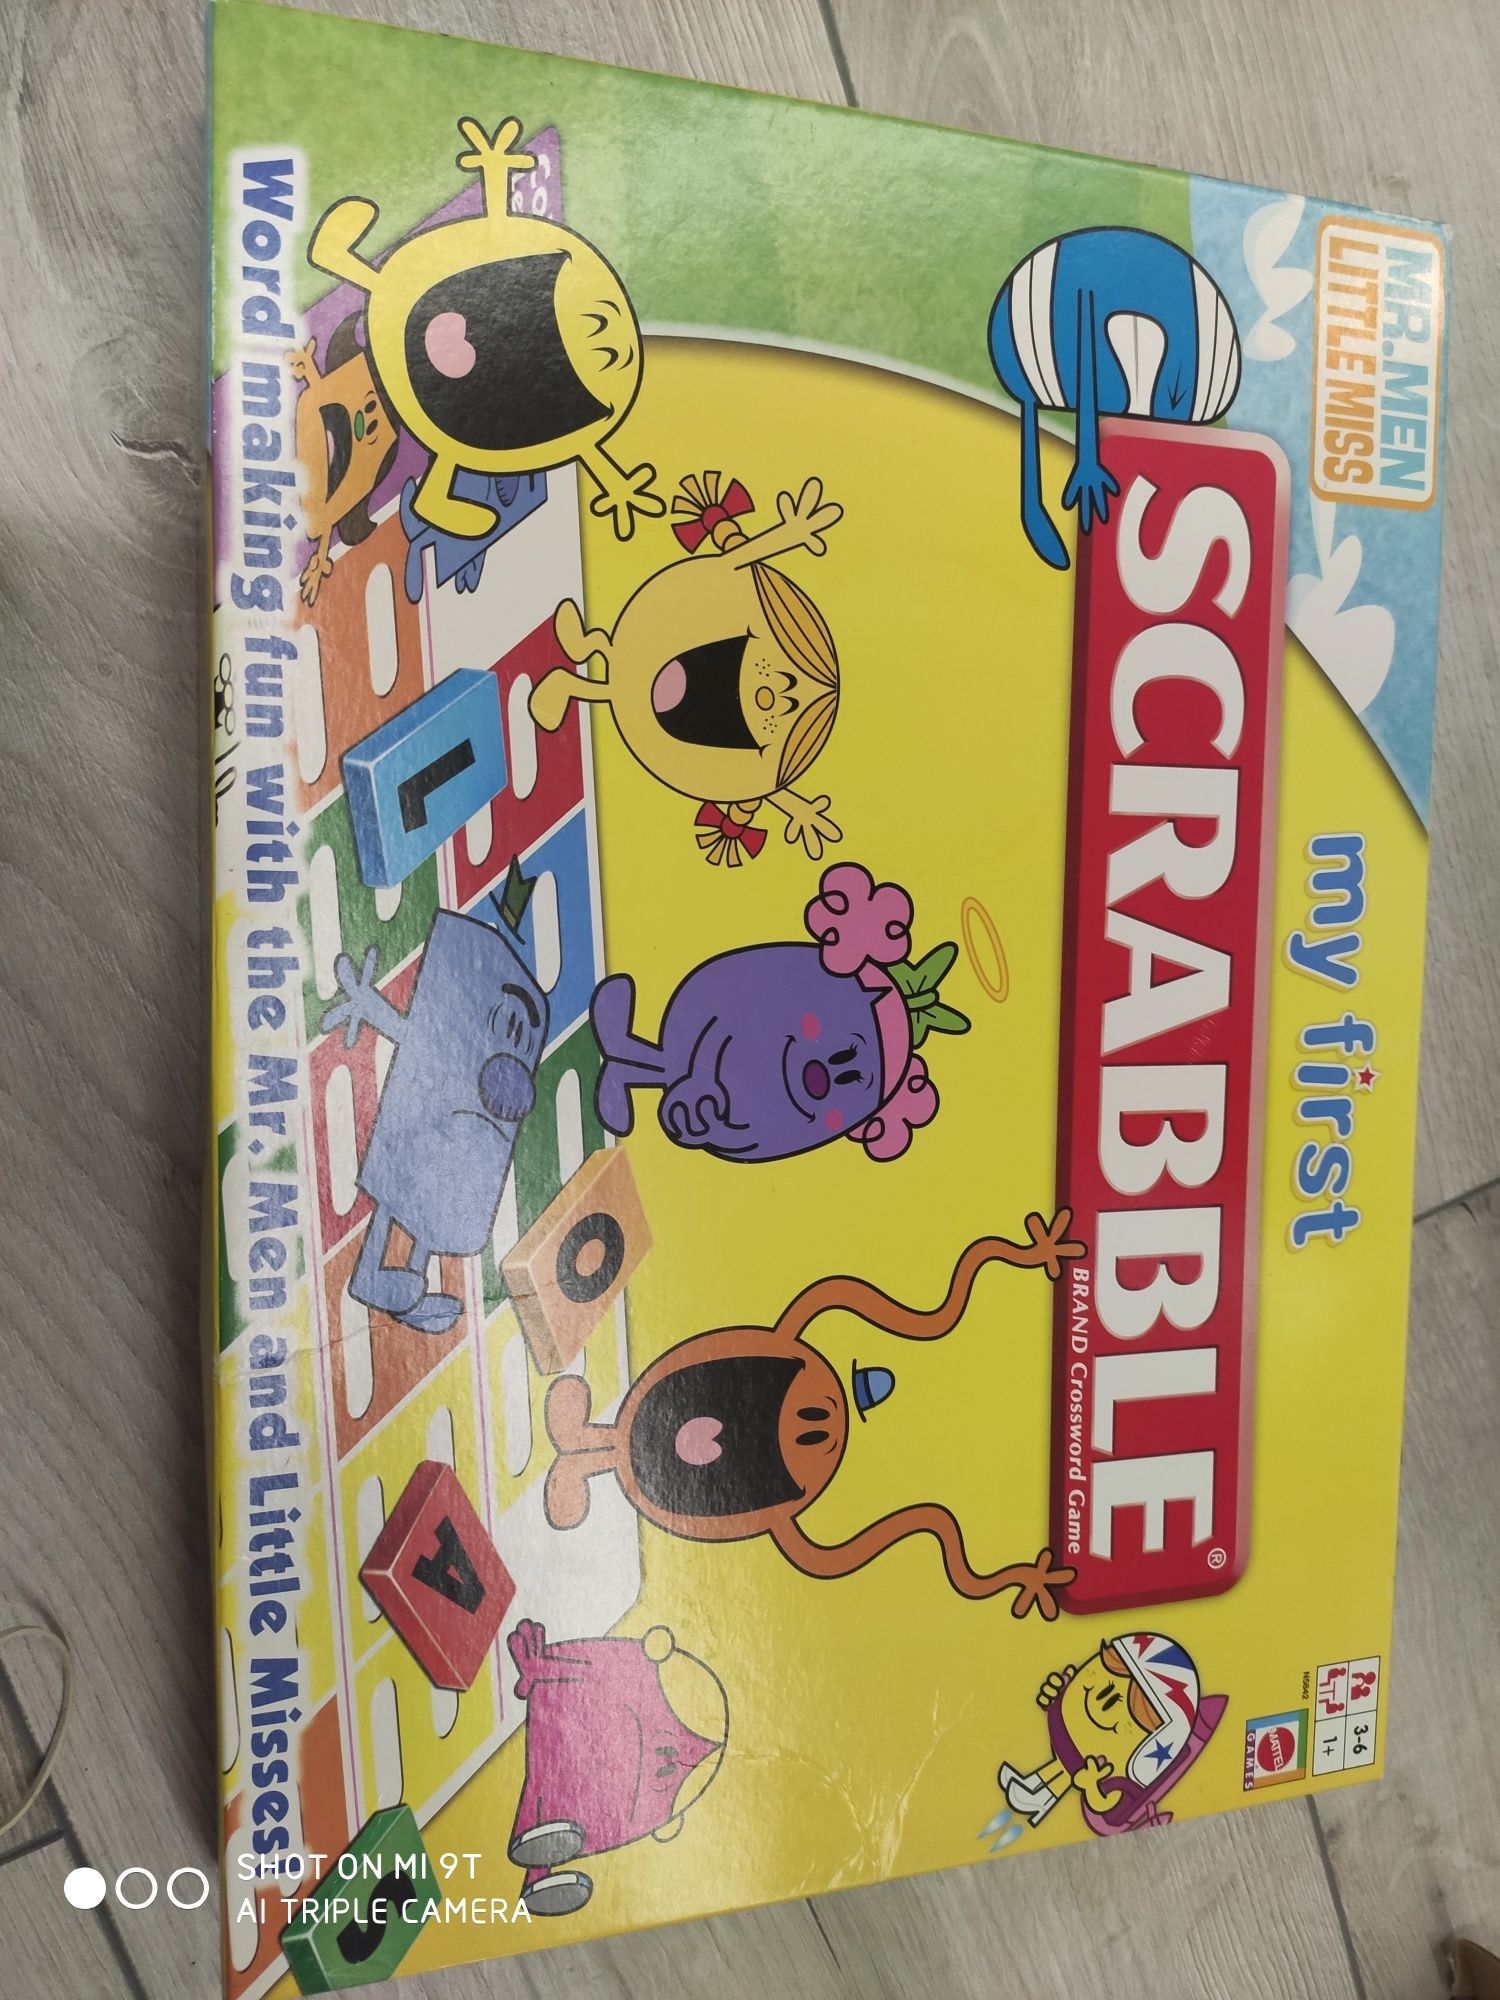 Scrabble junior bdb